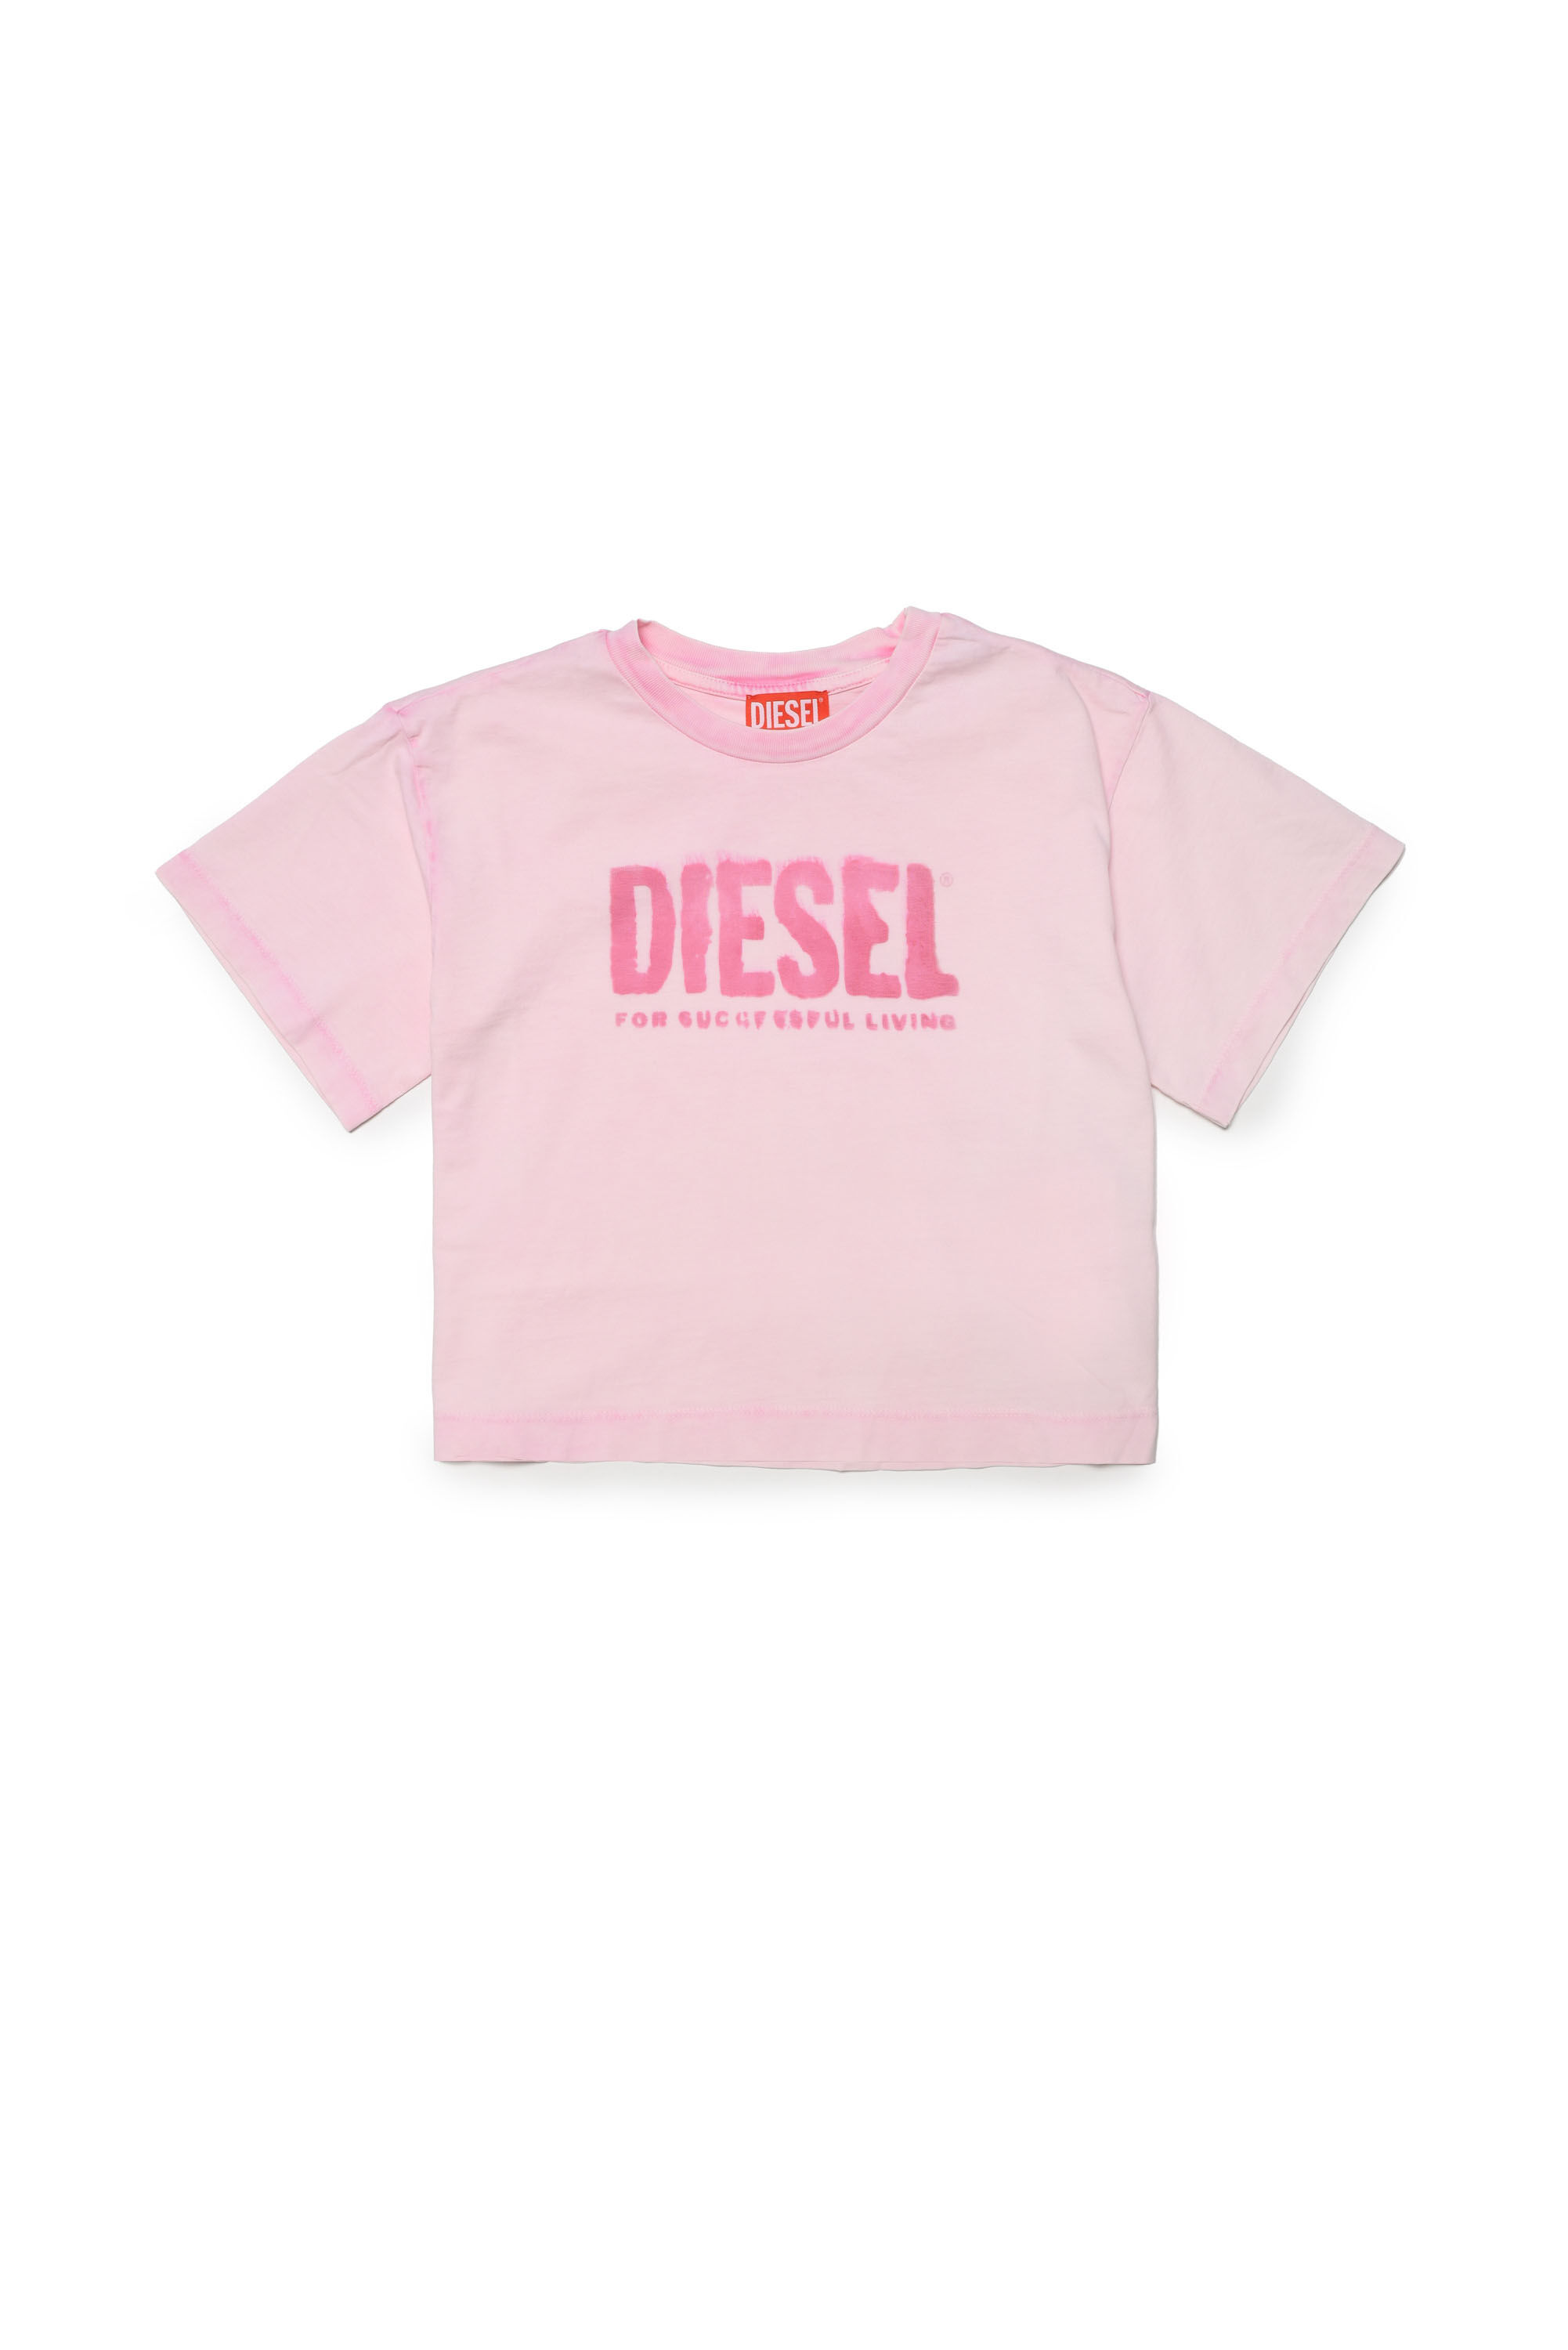 Diesel - TOILFY, Rose - Image 1